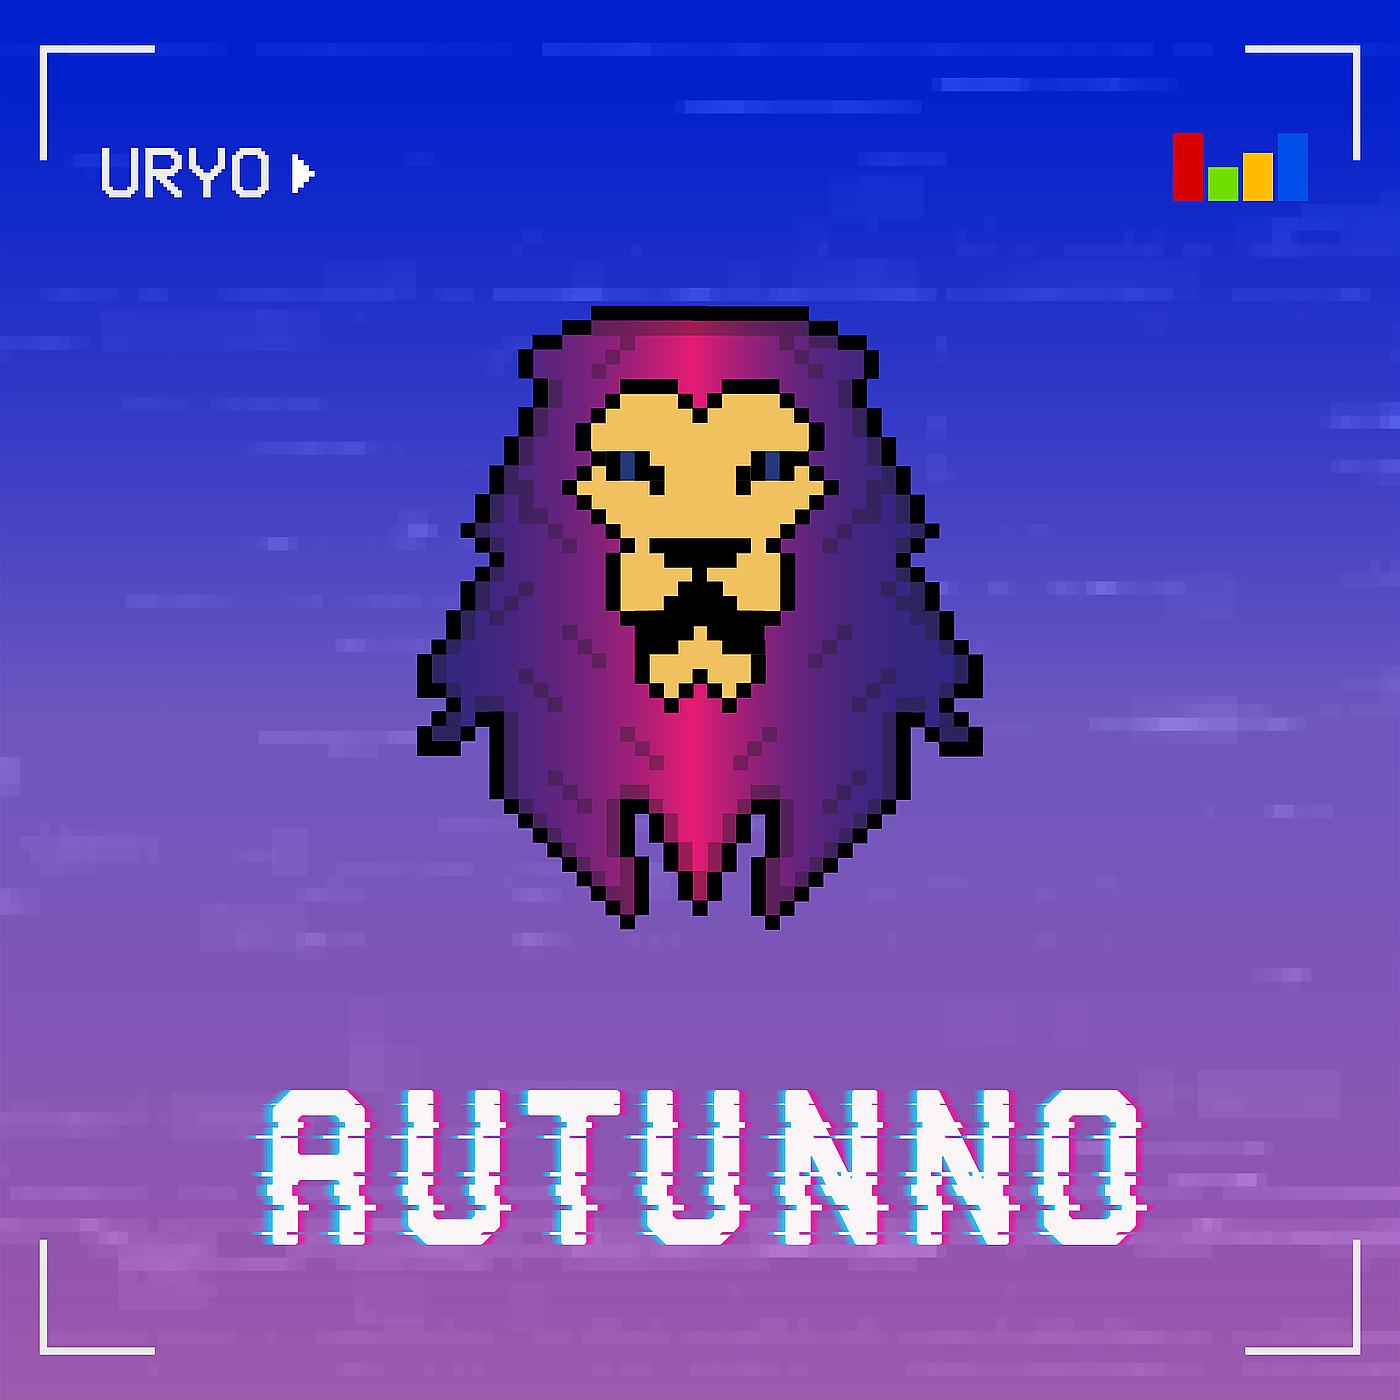 Постер альбома Autunno